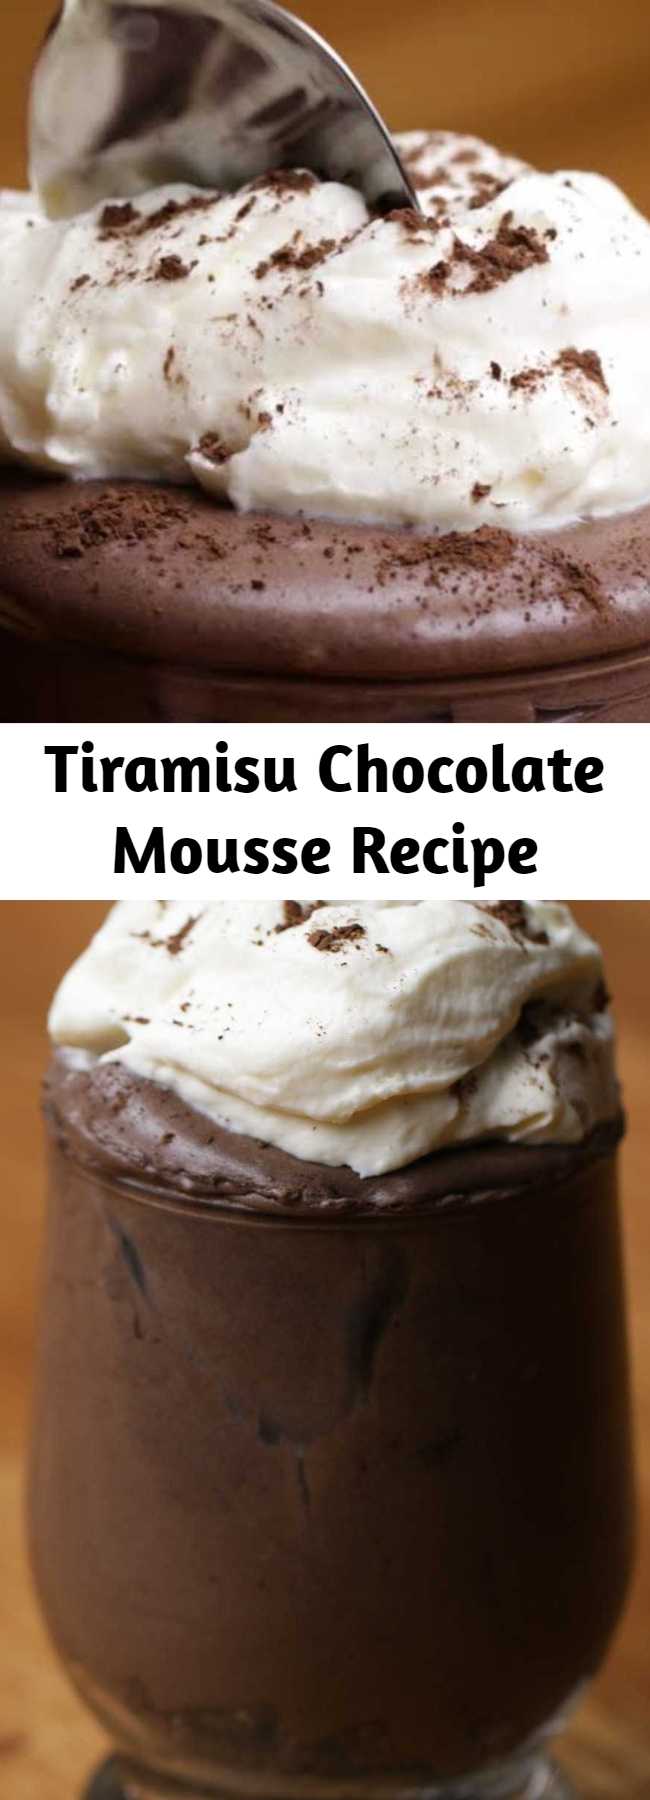 Tiramisu Chocolate Mousse Recipe - Savor your inner sweet tooth with this dreamy dessert.